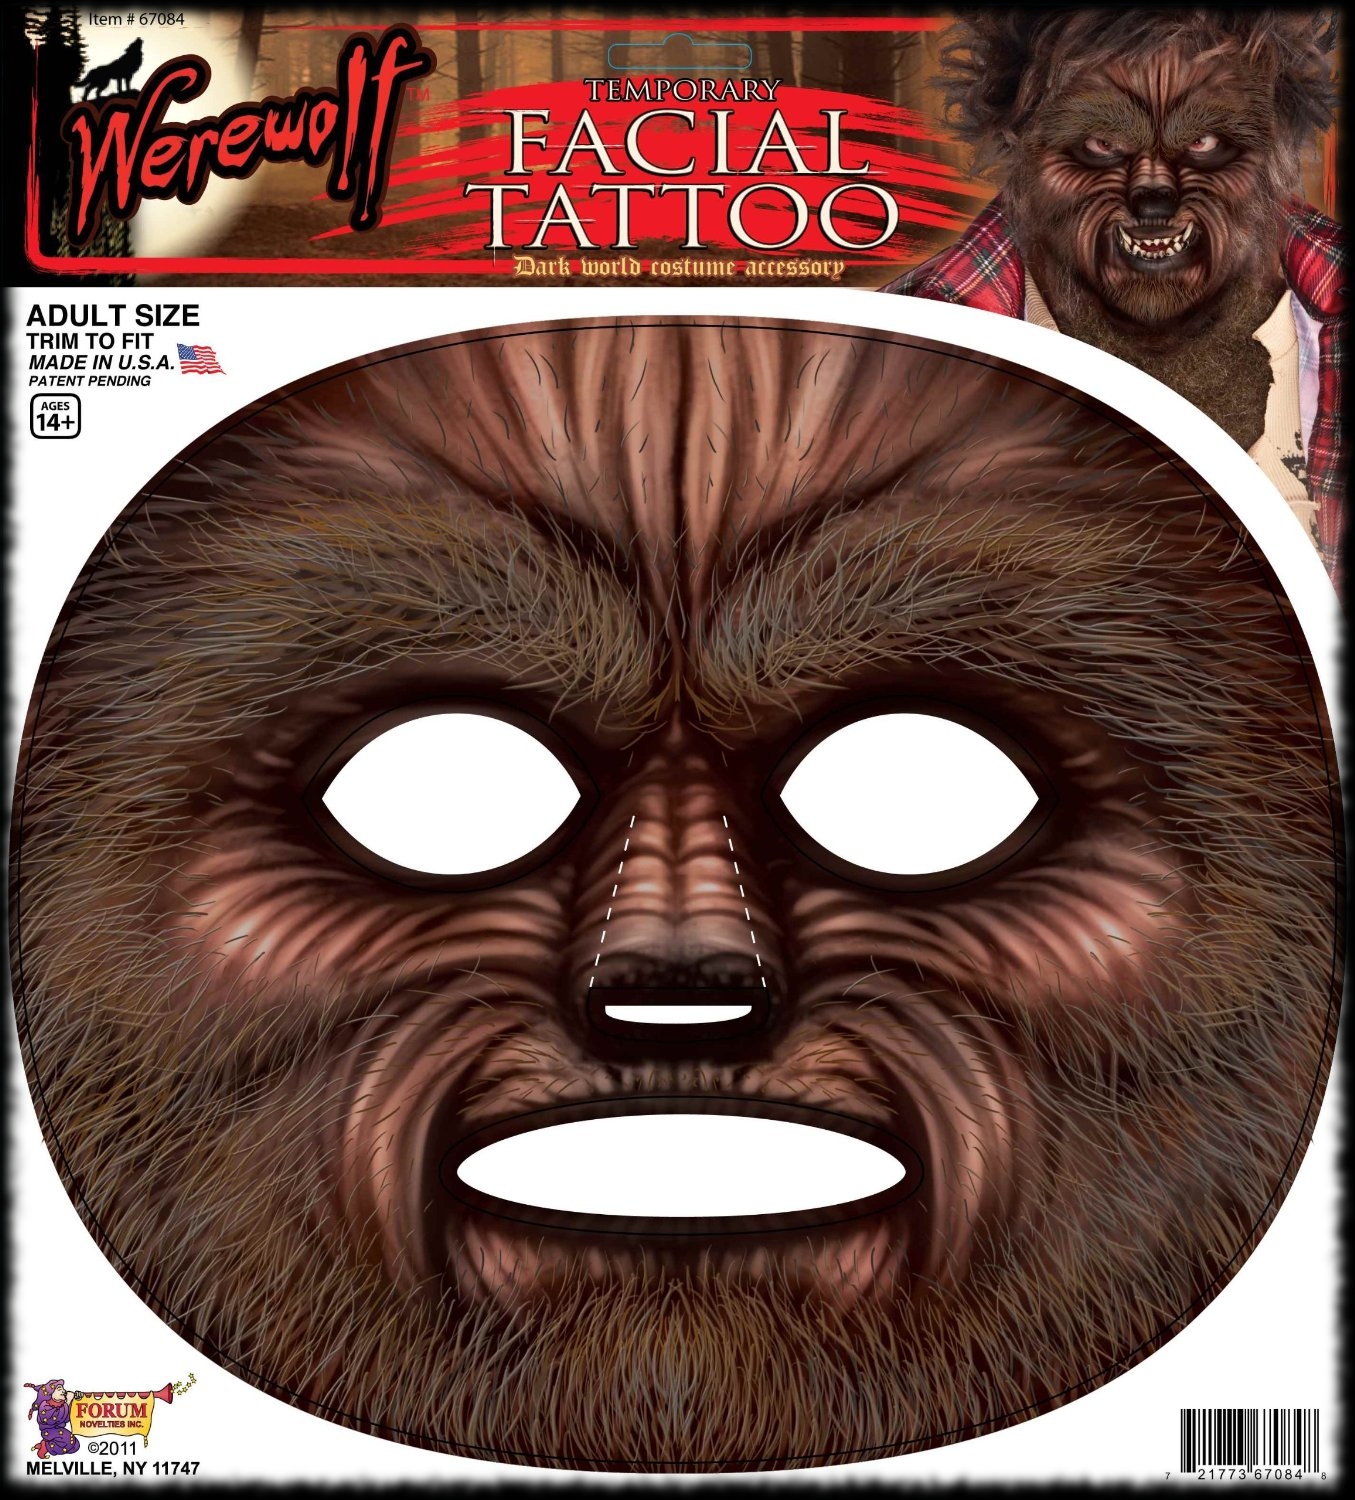 Werewolf Face Tattoo Halloween Facial Tattoo Costume Idea